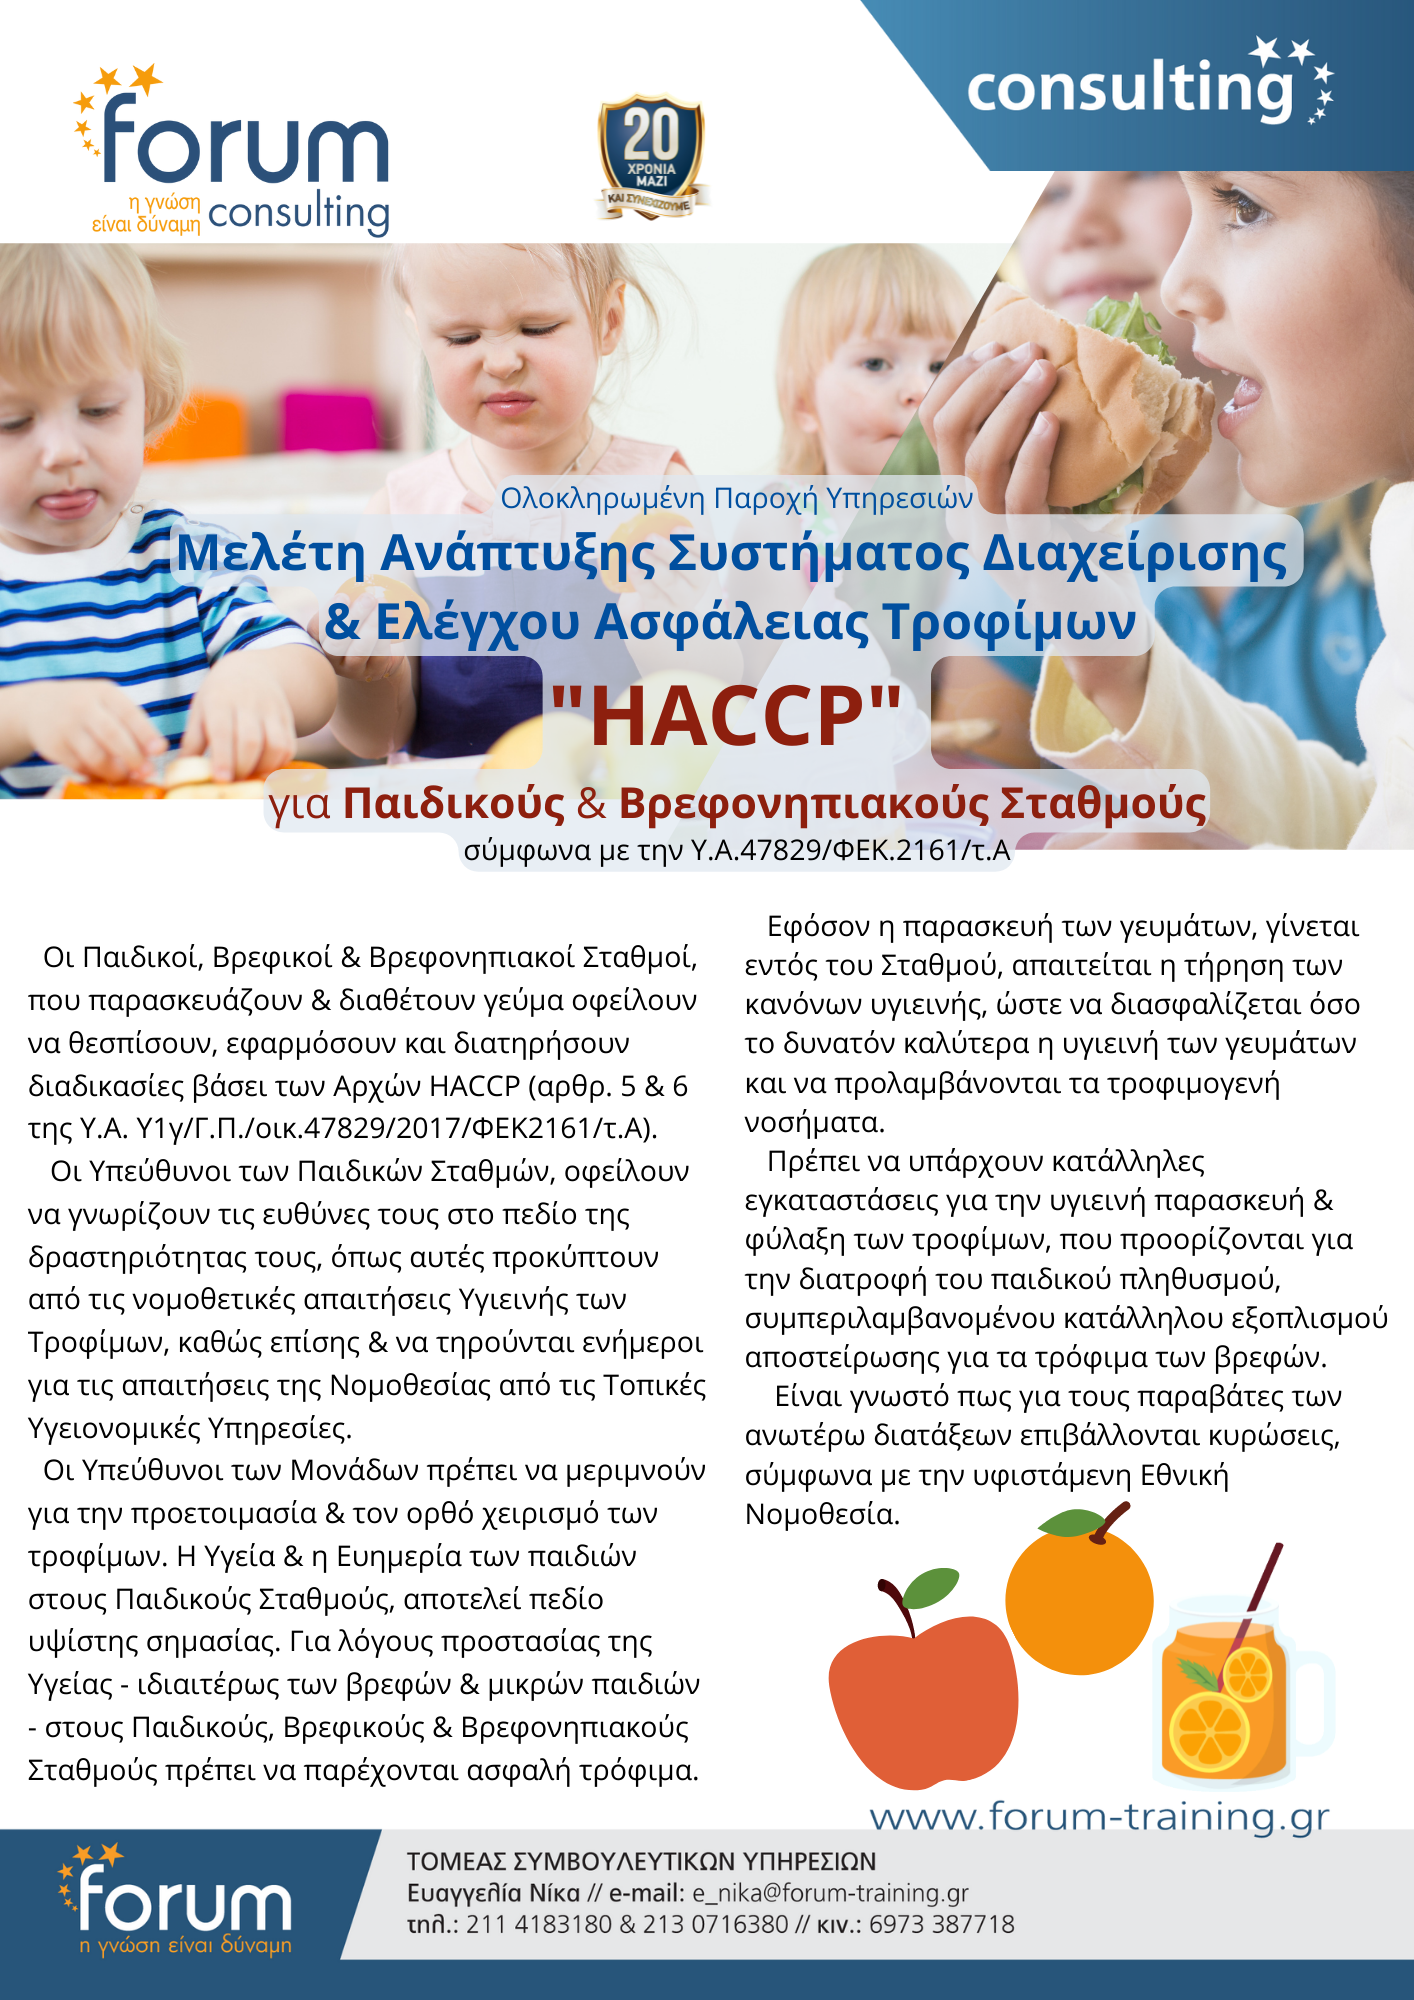 HACCP ΑσφάλειαΤροφίμωνΠαιδ.Σταθμών Συμβουλευτική1